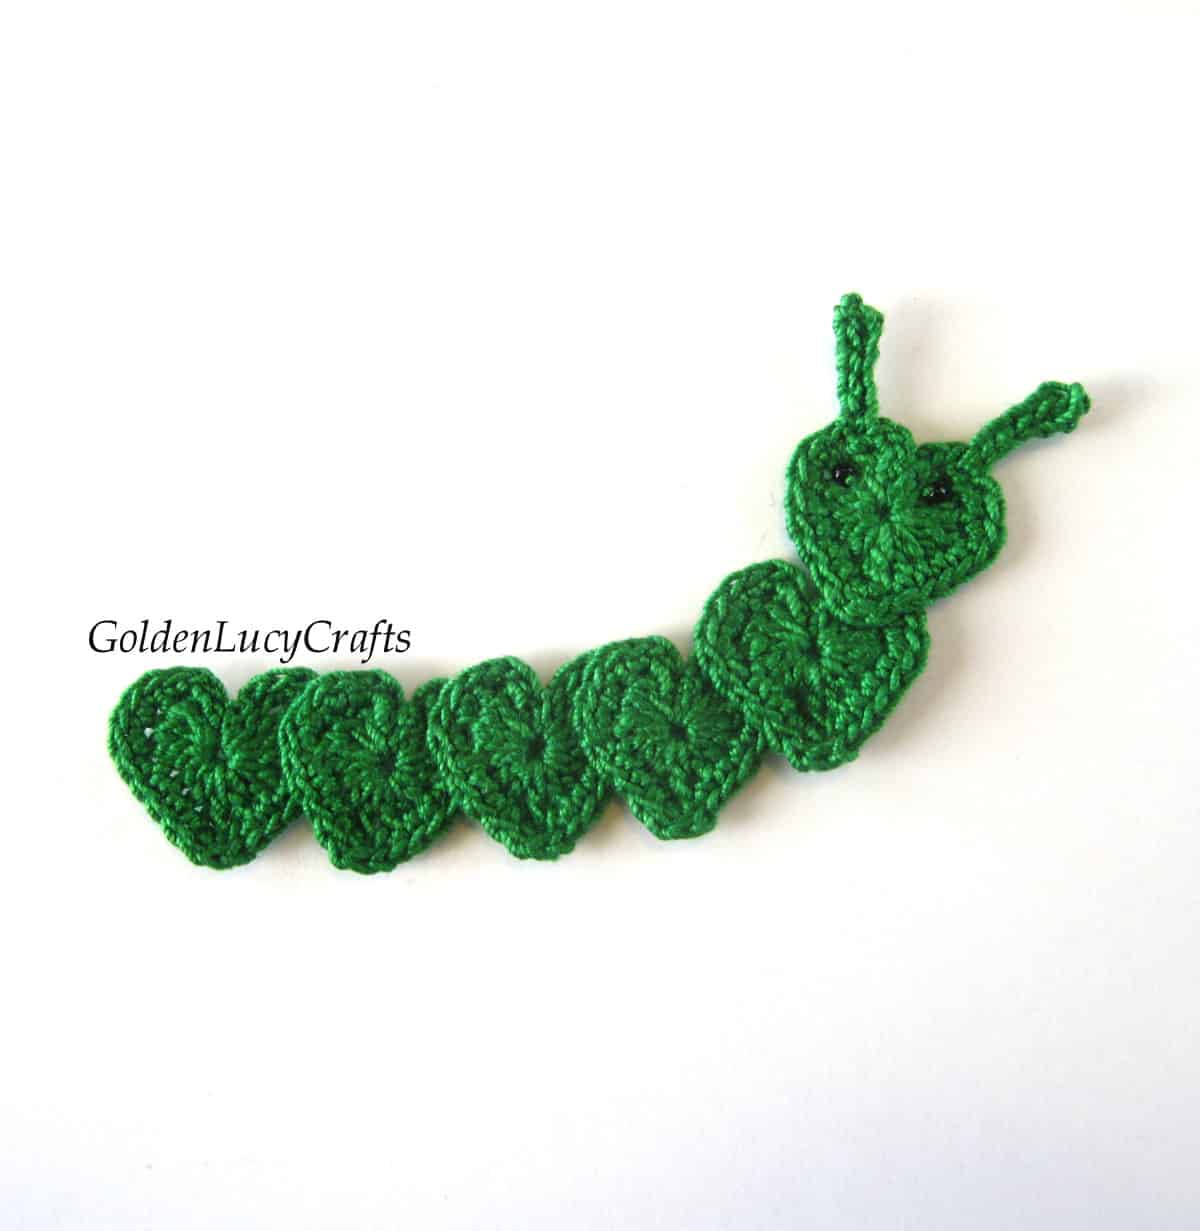 Crocheted green caterpillar made from hearts.